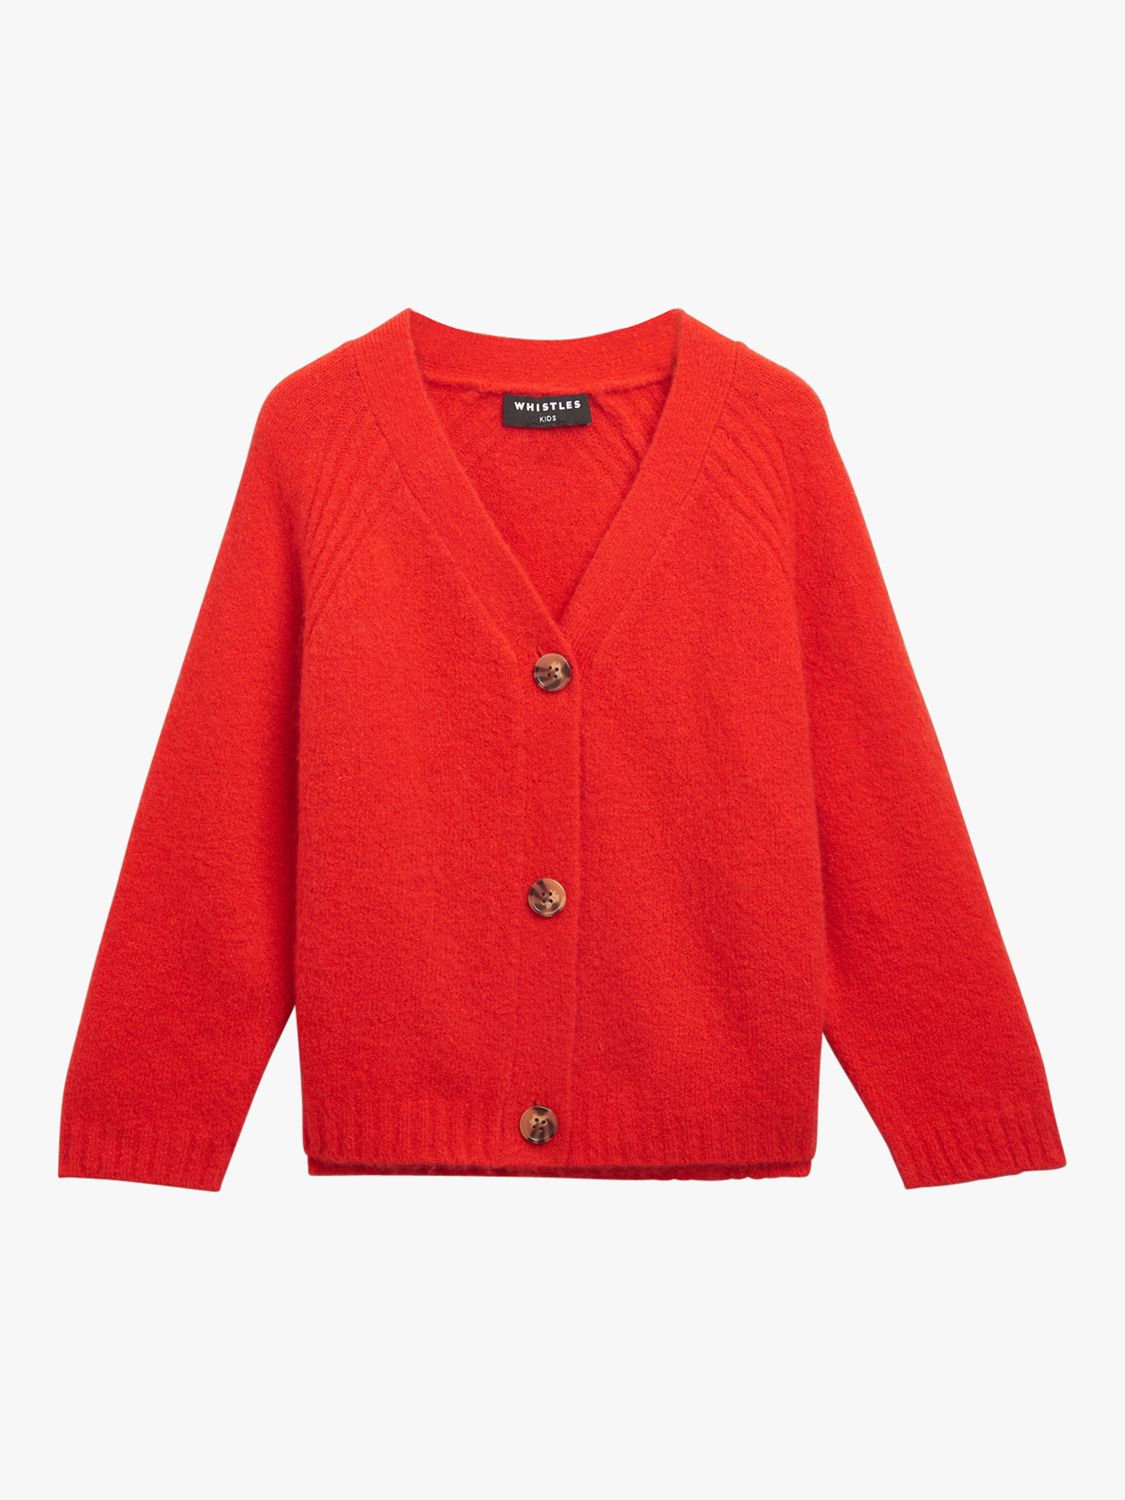 Whistles Kids' Textured Wool Blend Cardigan, Red, 3-4 years